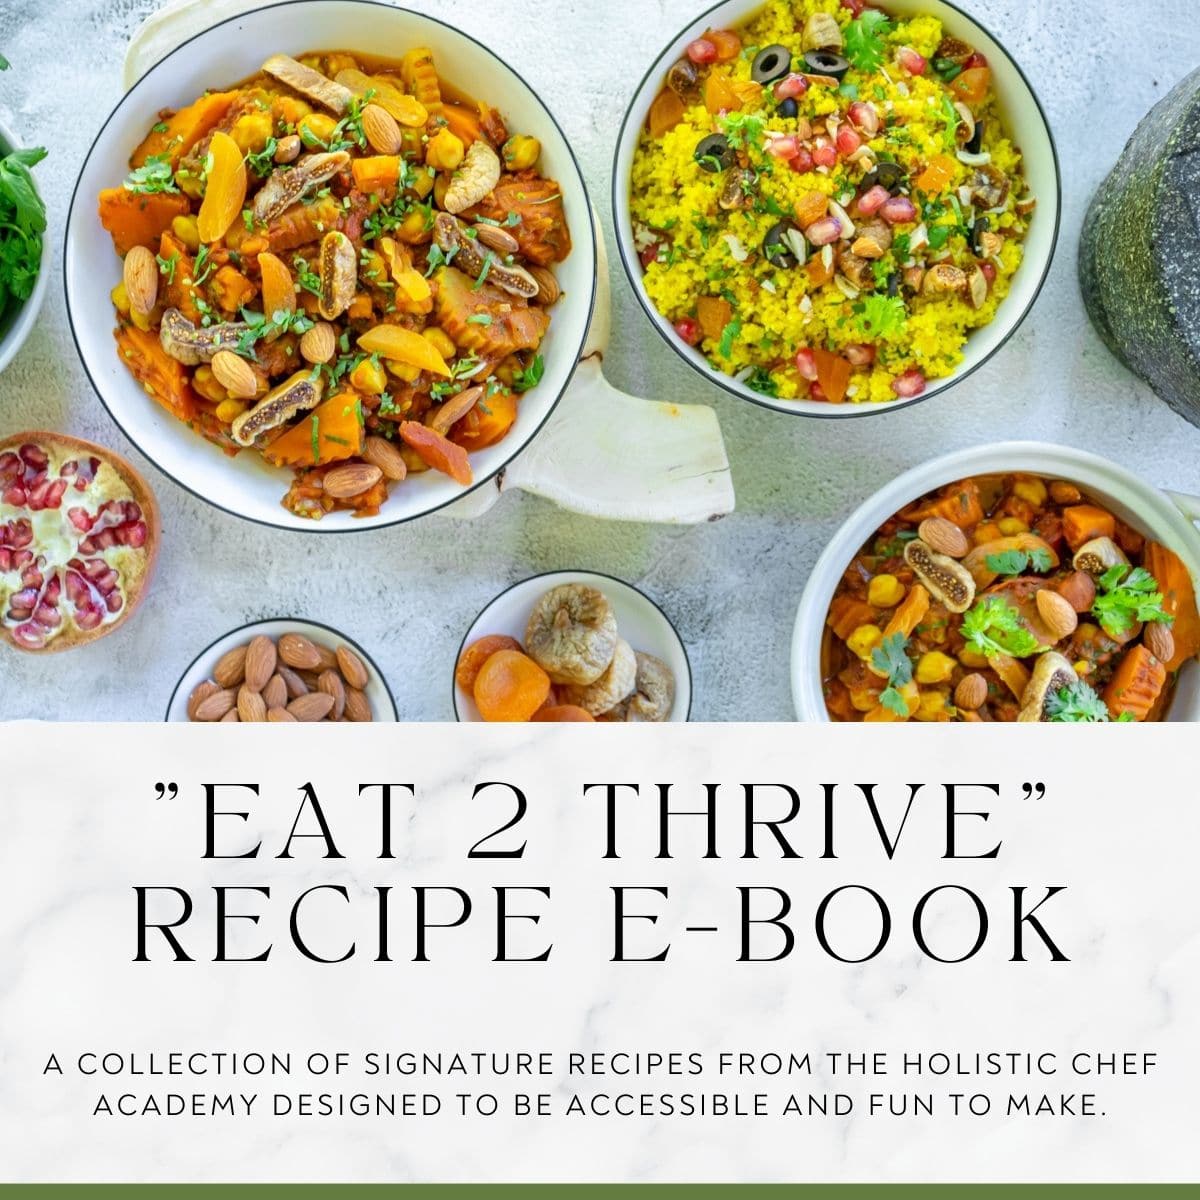 Eat 2 Thrive Plant-Based Recipe E-Book 